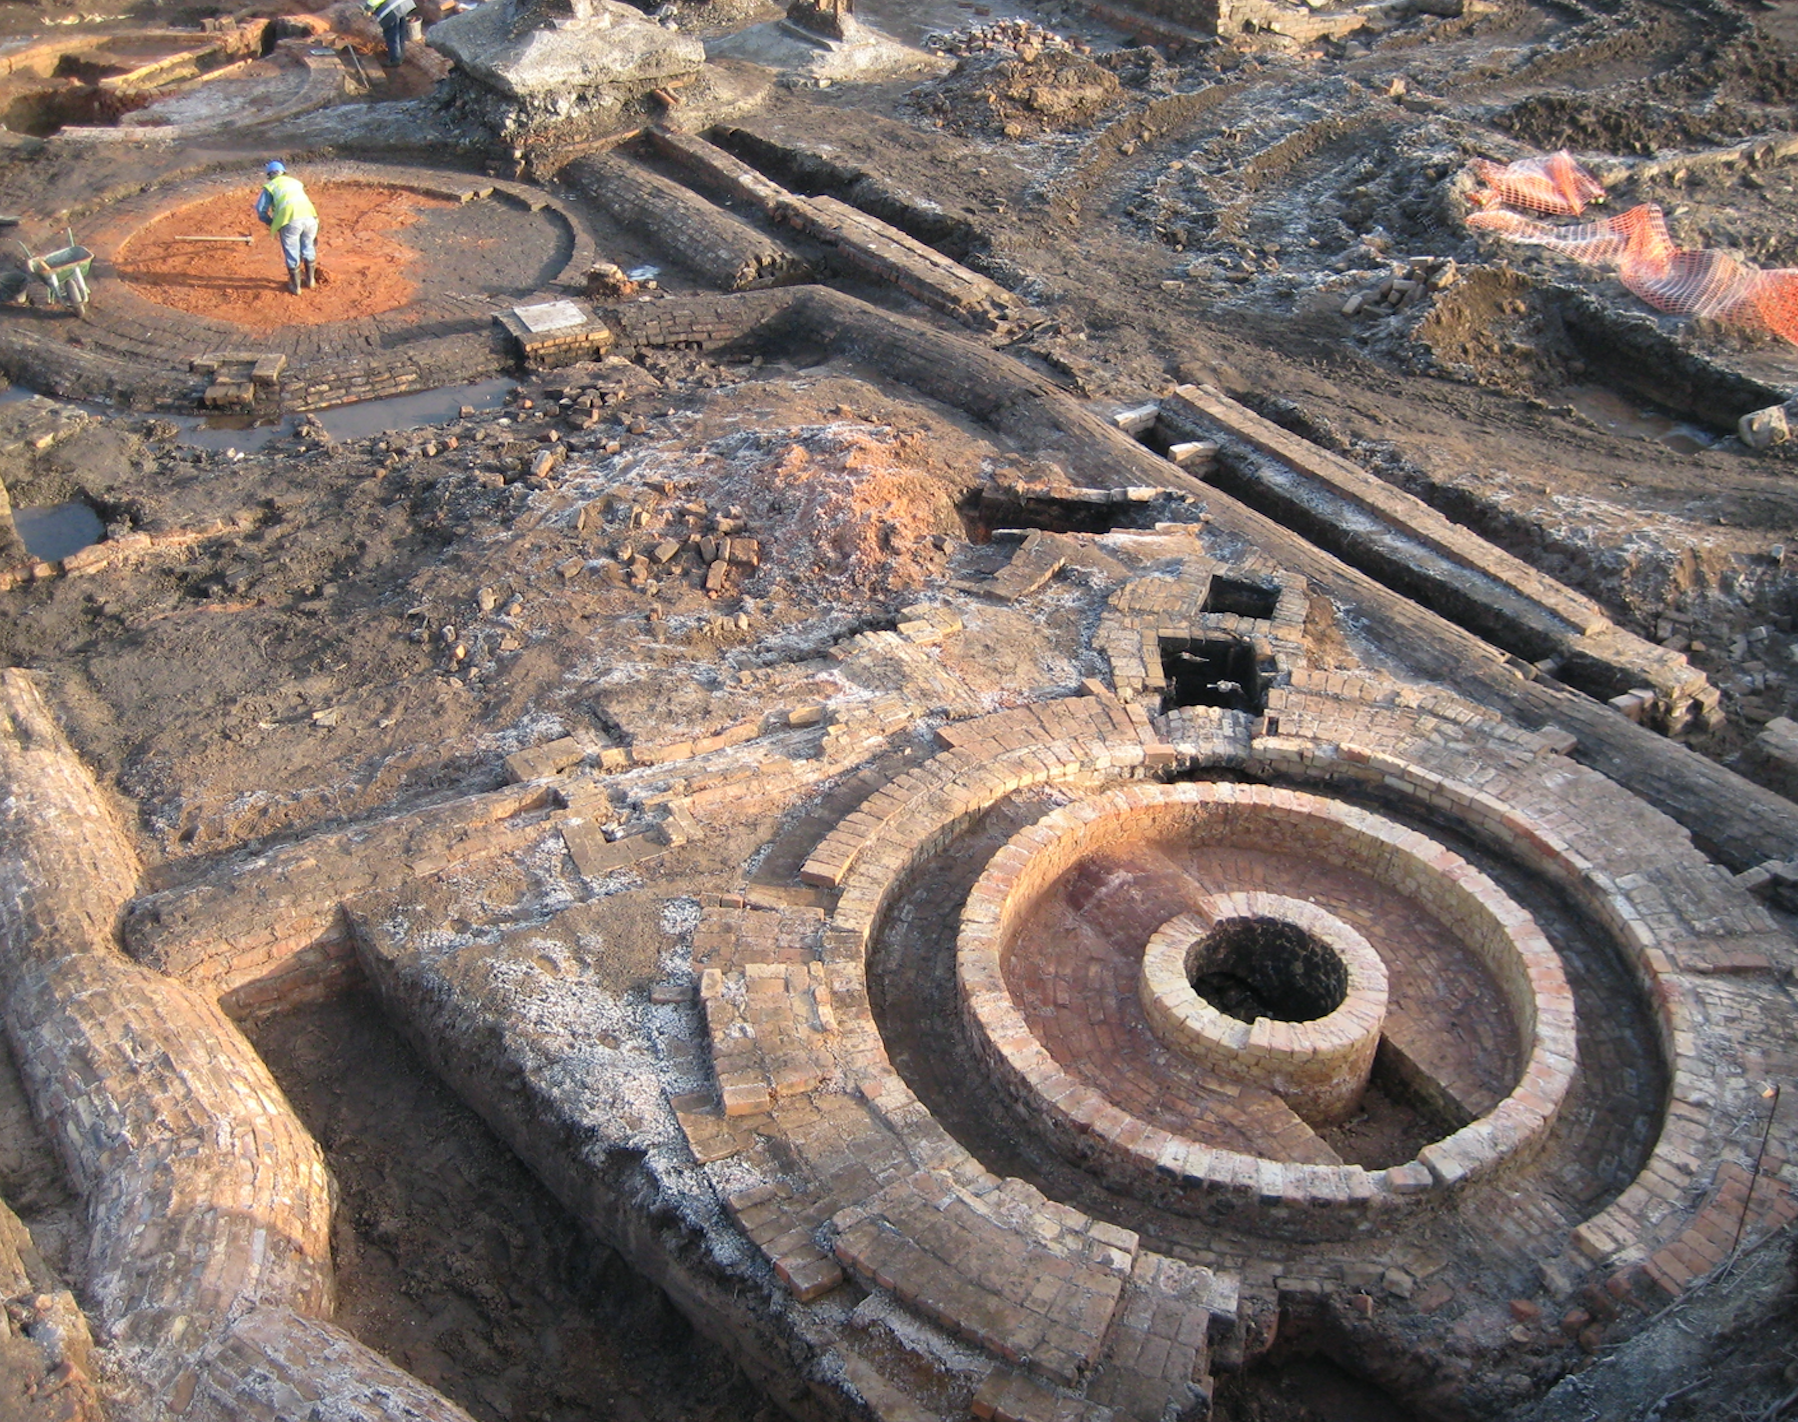 Edinburgh-based Headland Archaeology acquired by RSK